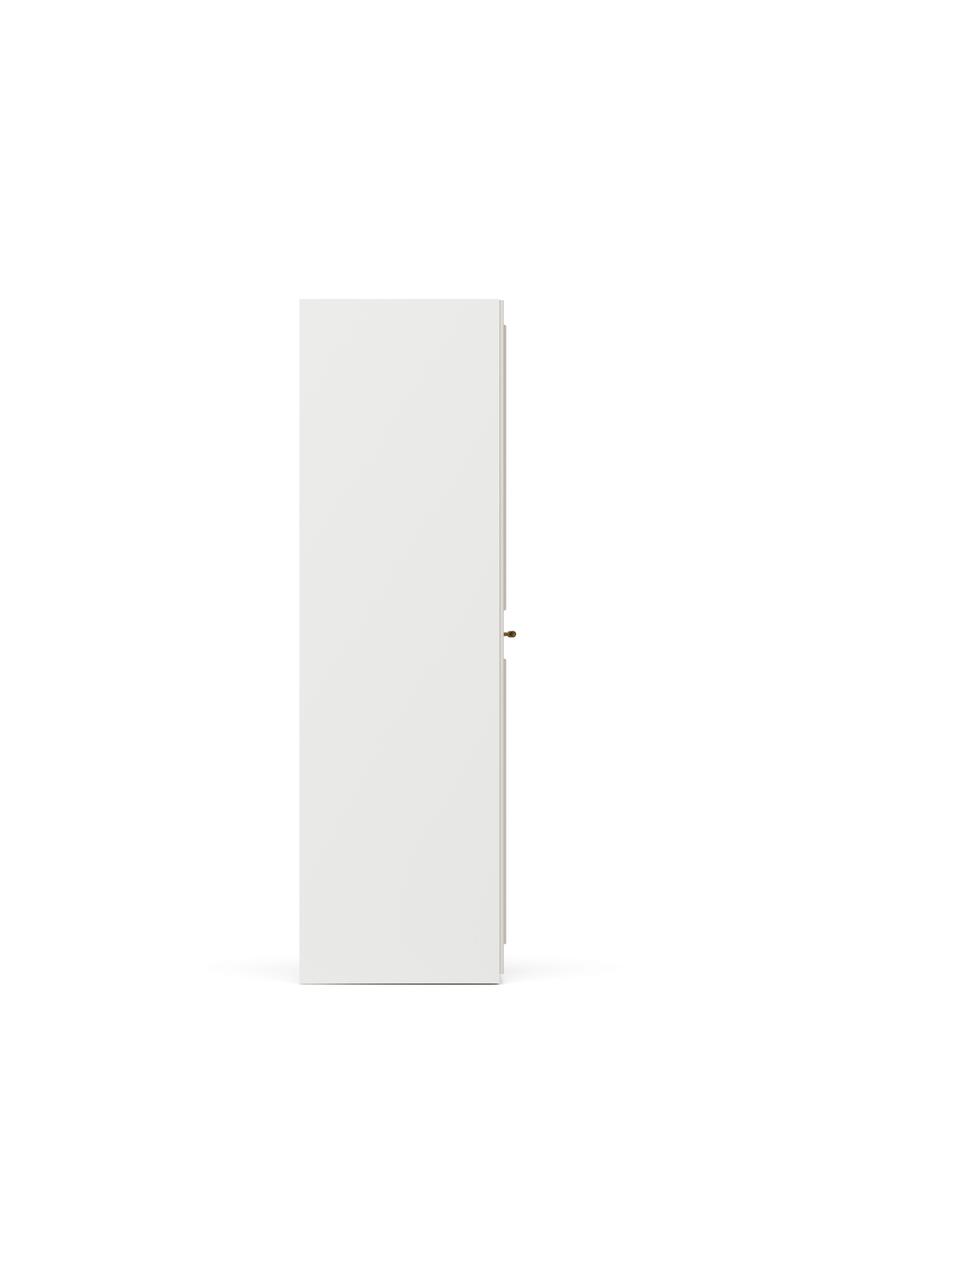 Modulaire draaideurkast Charlotte in beige met 4 deuren, verschillende varianten, Frame: met melamine beklede spaa, Beige, B 200 x H 200 cm, basis interieur